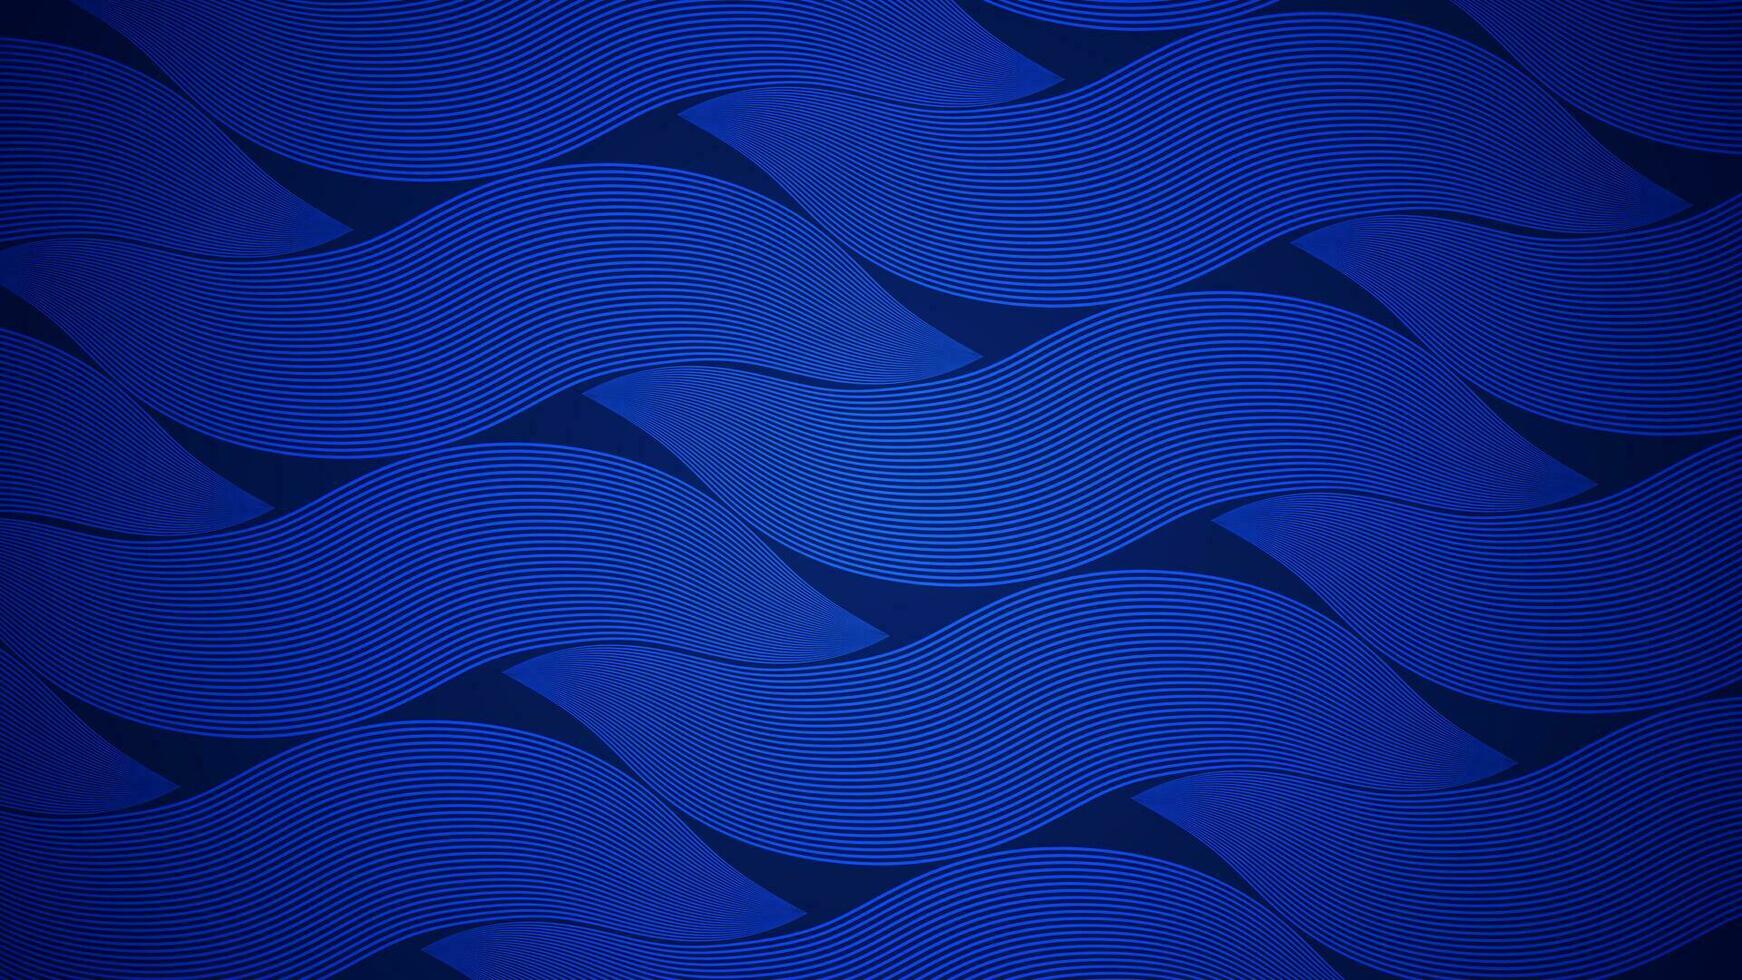 mörk blå abstrakt bakgrund med Vinka stil rader som de huvud element. vektor